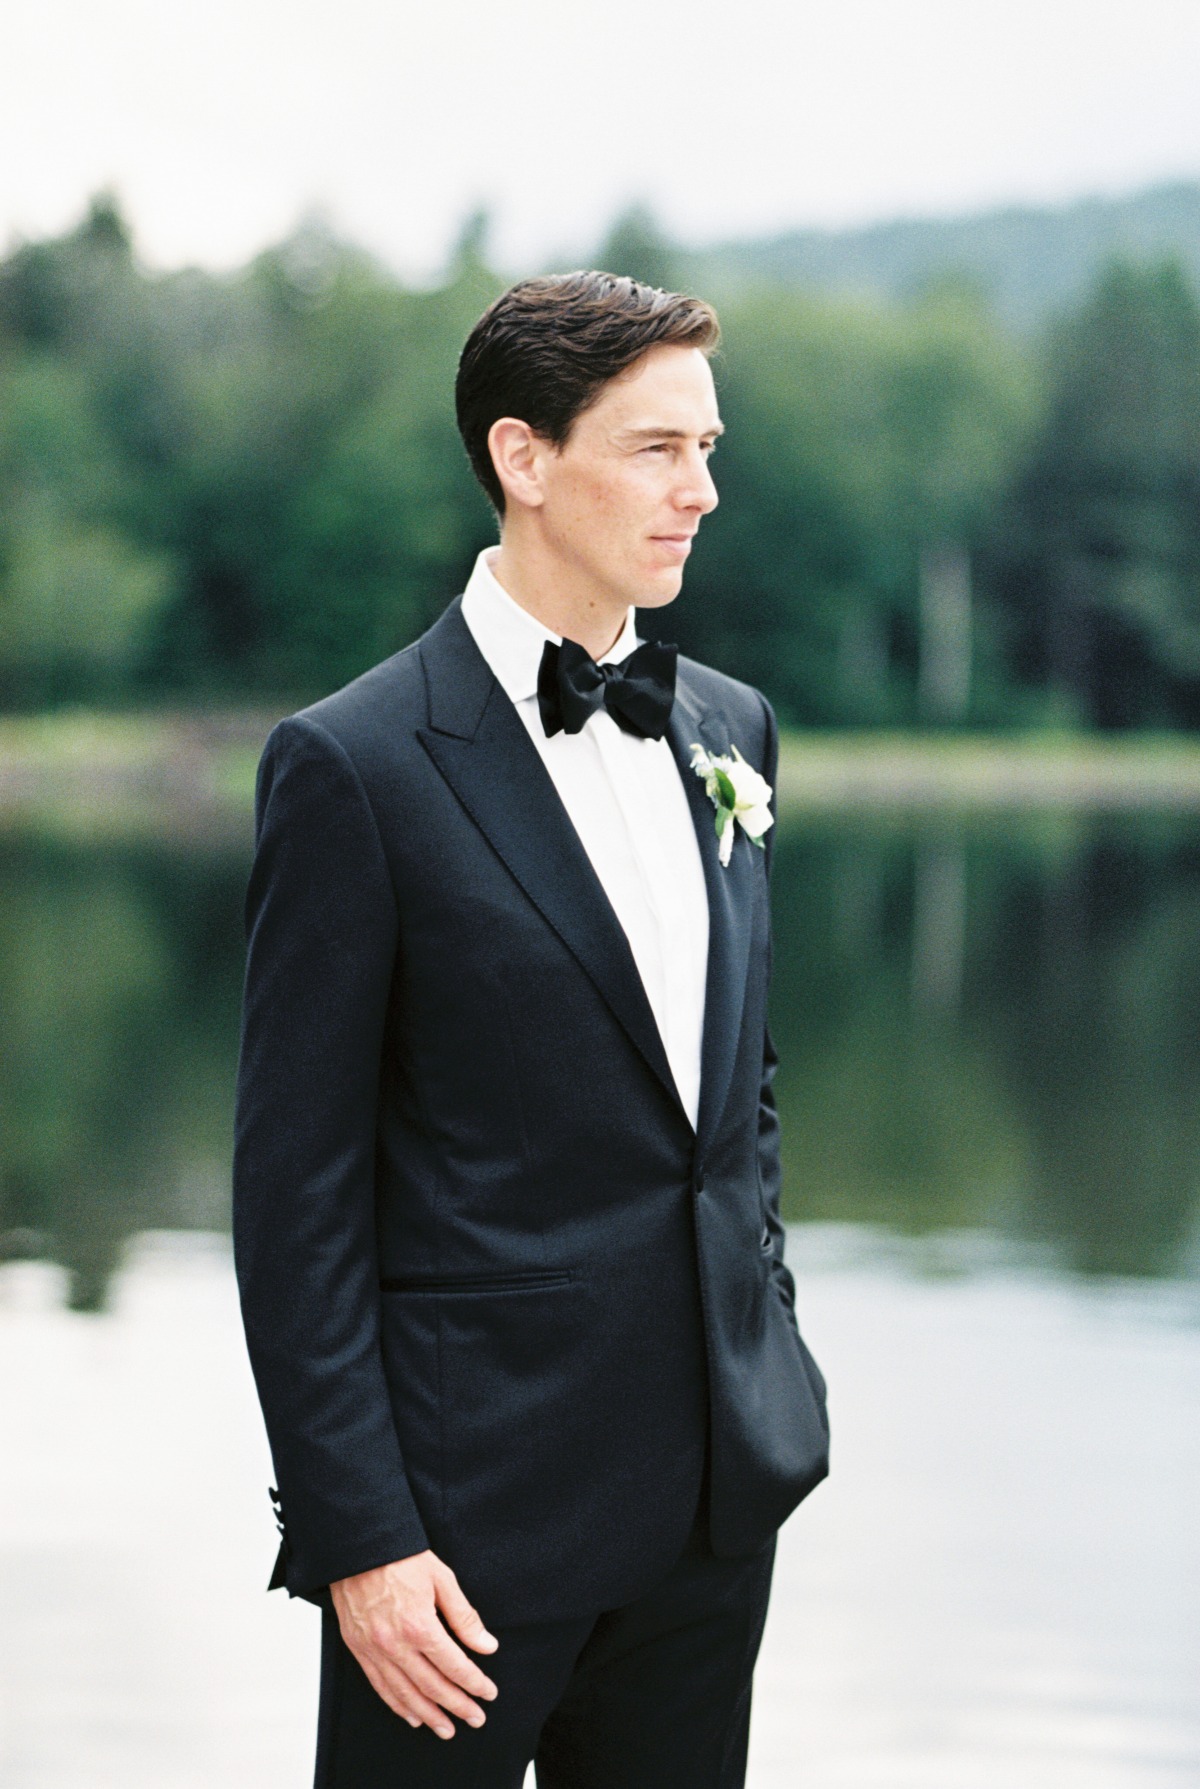 Dapper groom in traditional tuxedo for lakeside wedding 